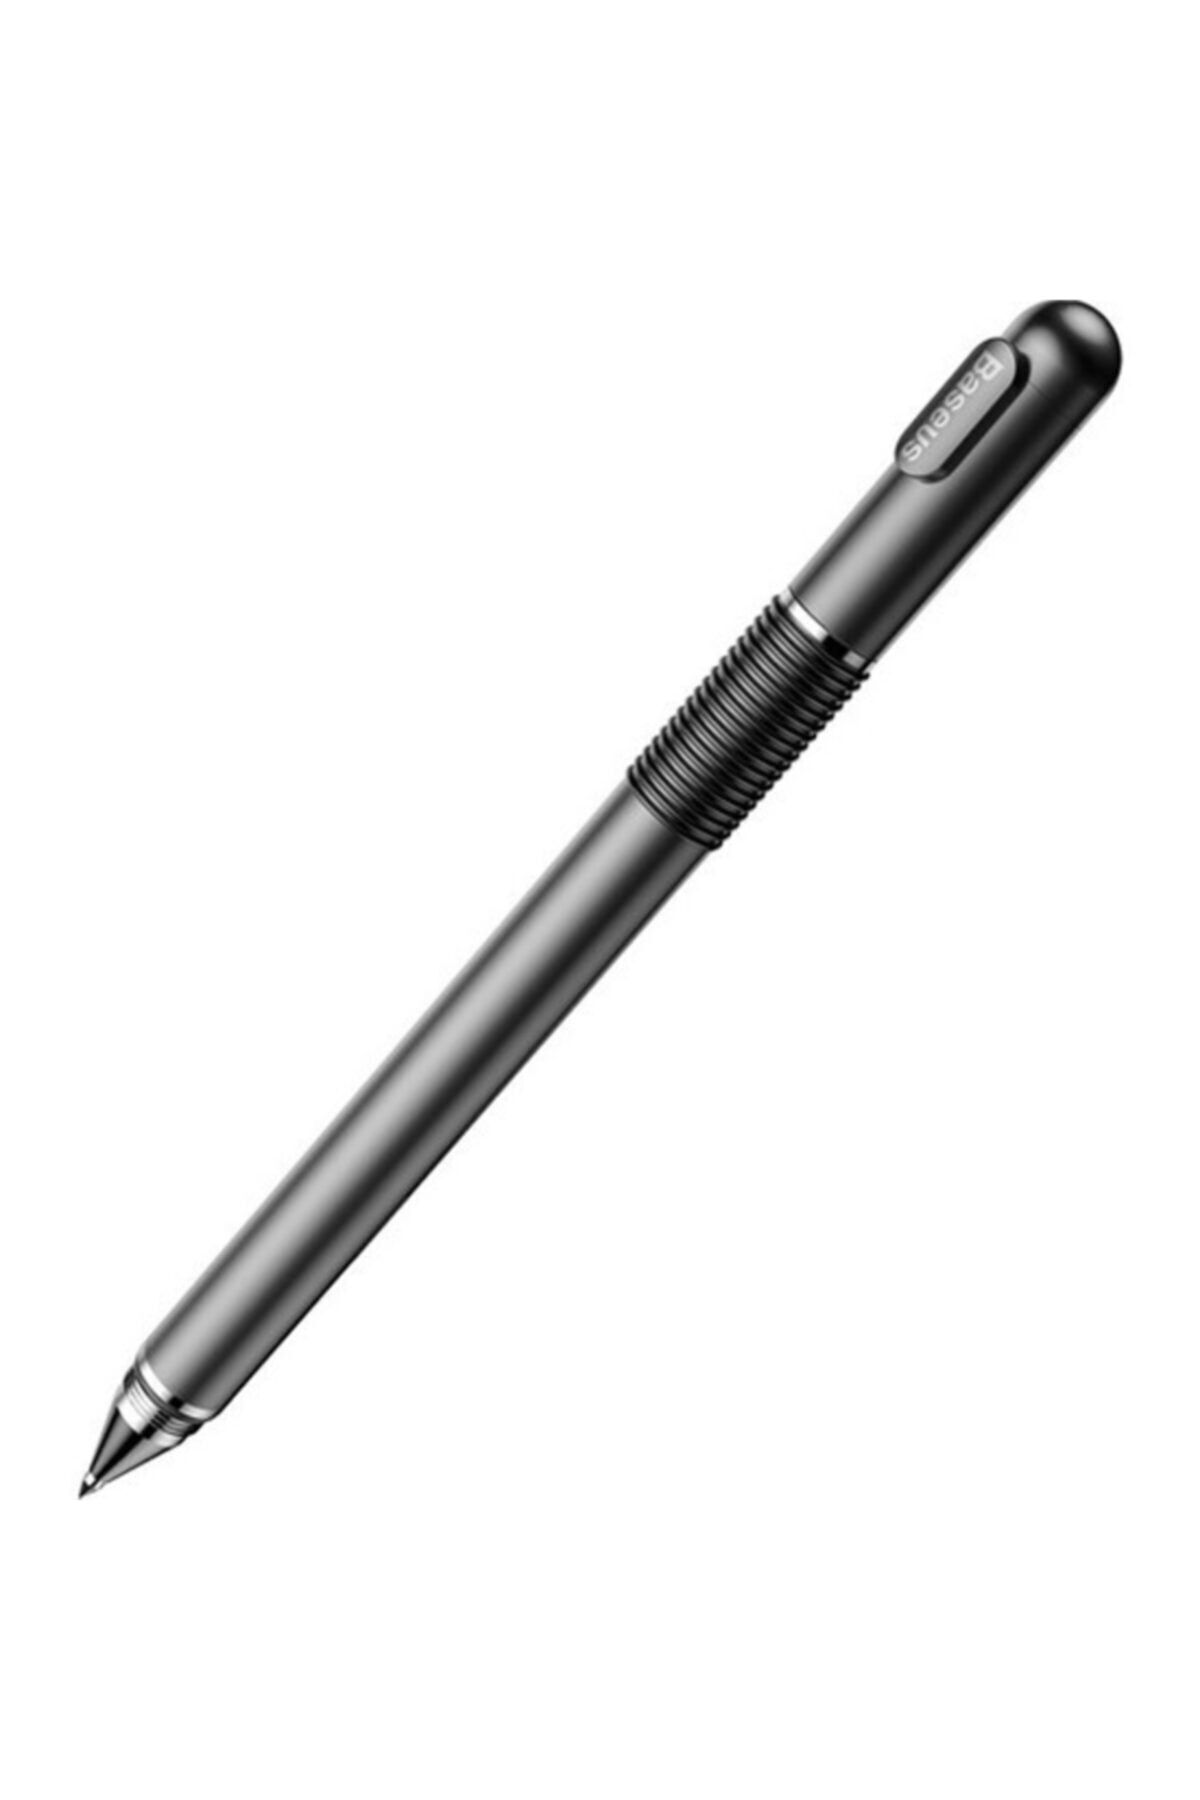 Baseus %100 Orjinal Hassas Stylus Tasarım Çizim Kalemi Tablet Dokunmatik Kalem